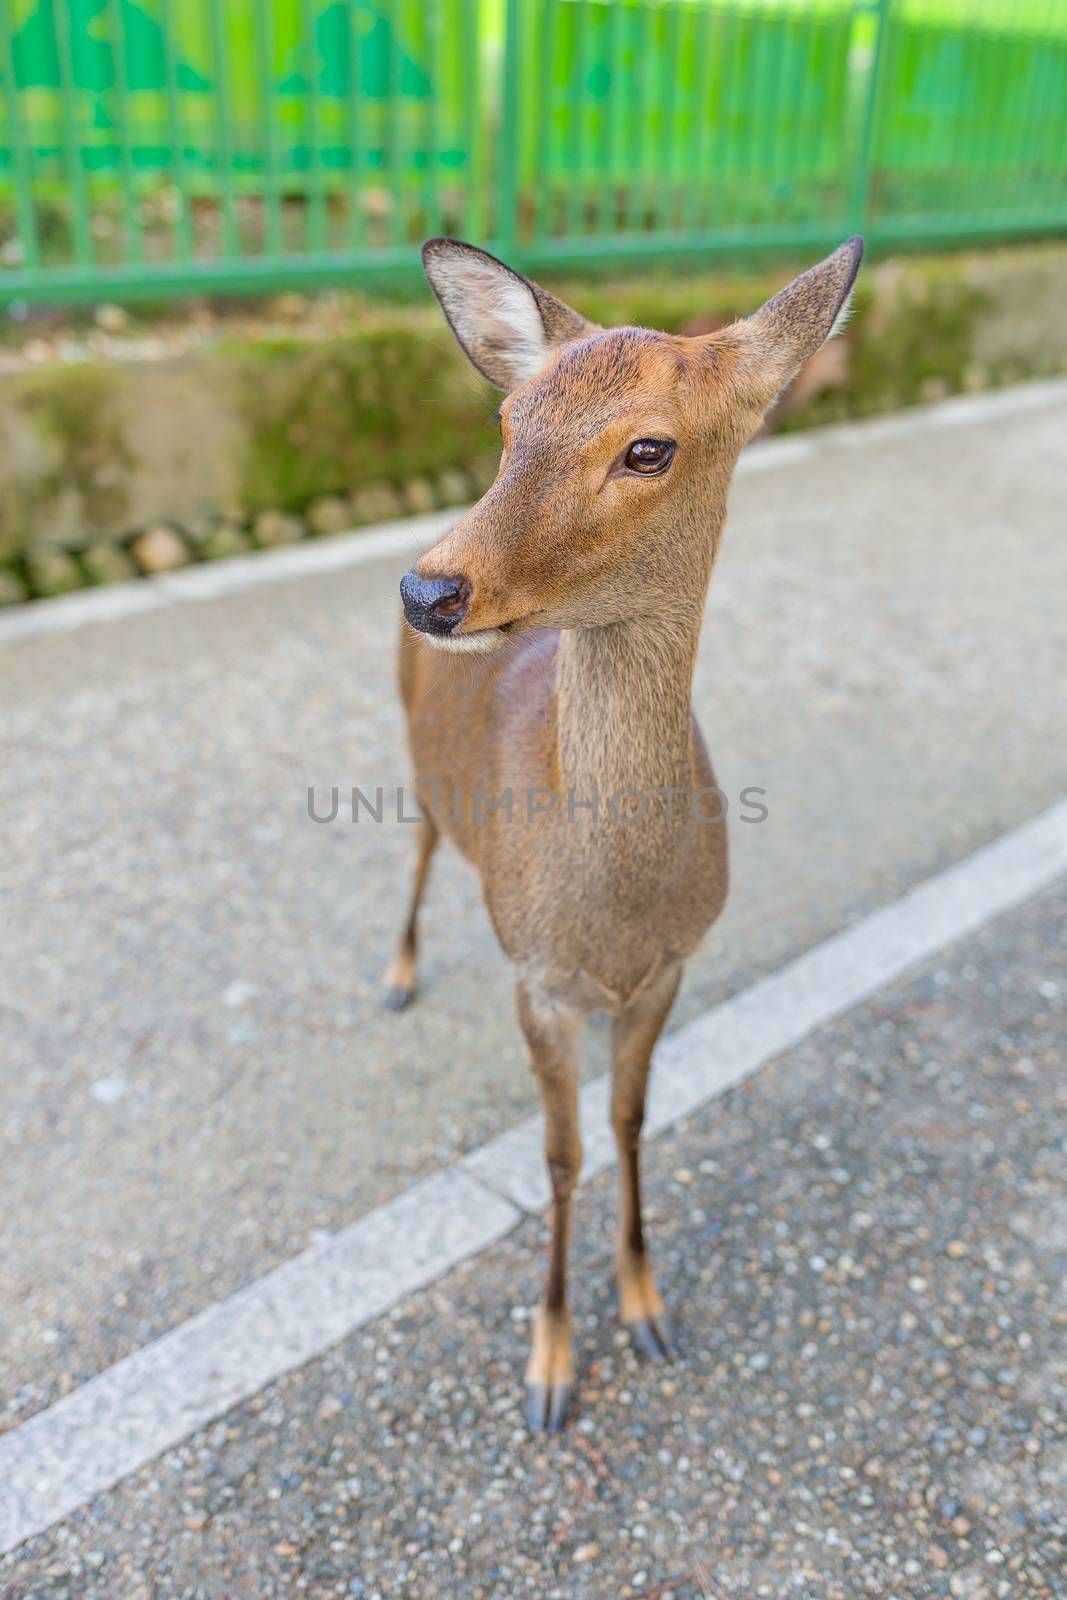 Deer fawn by leungchopan